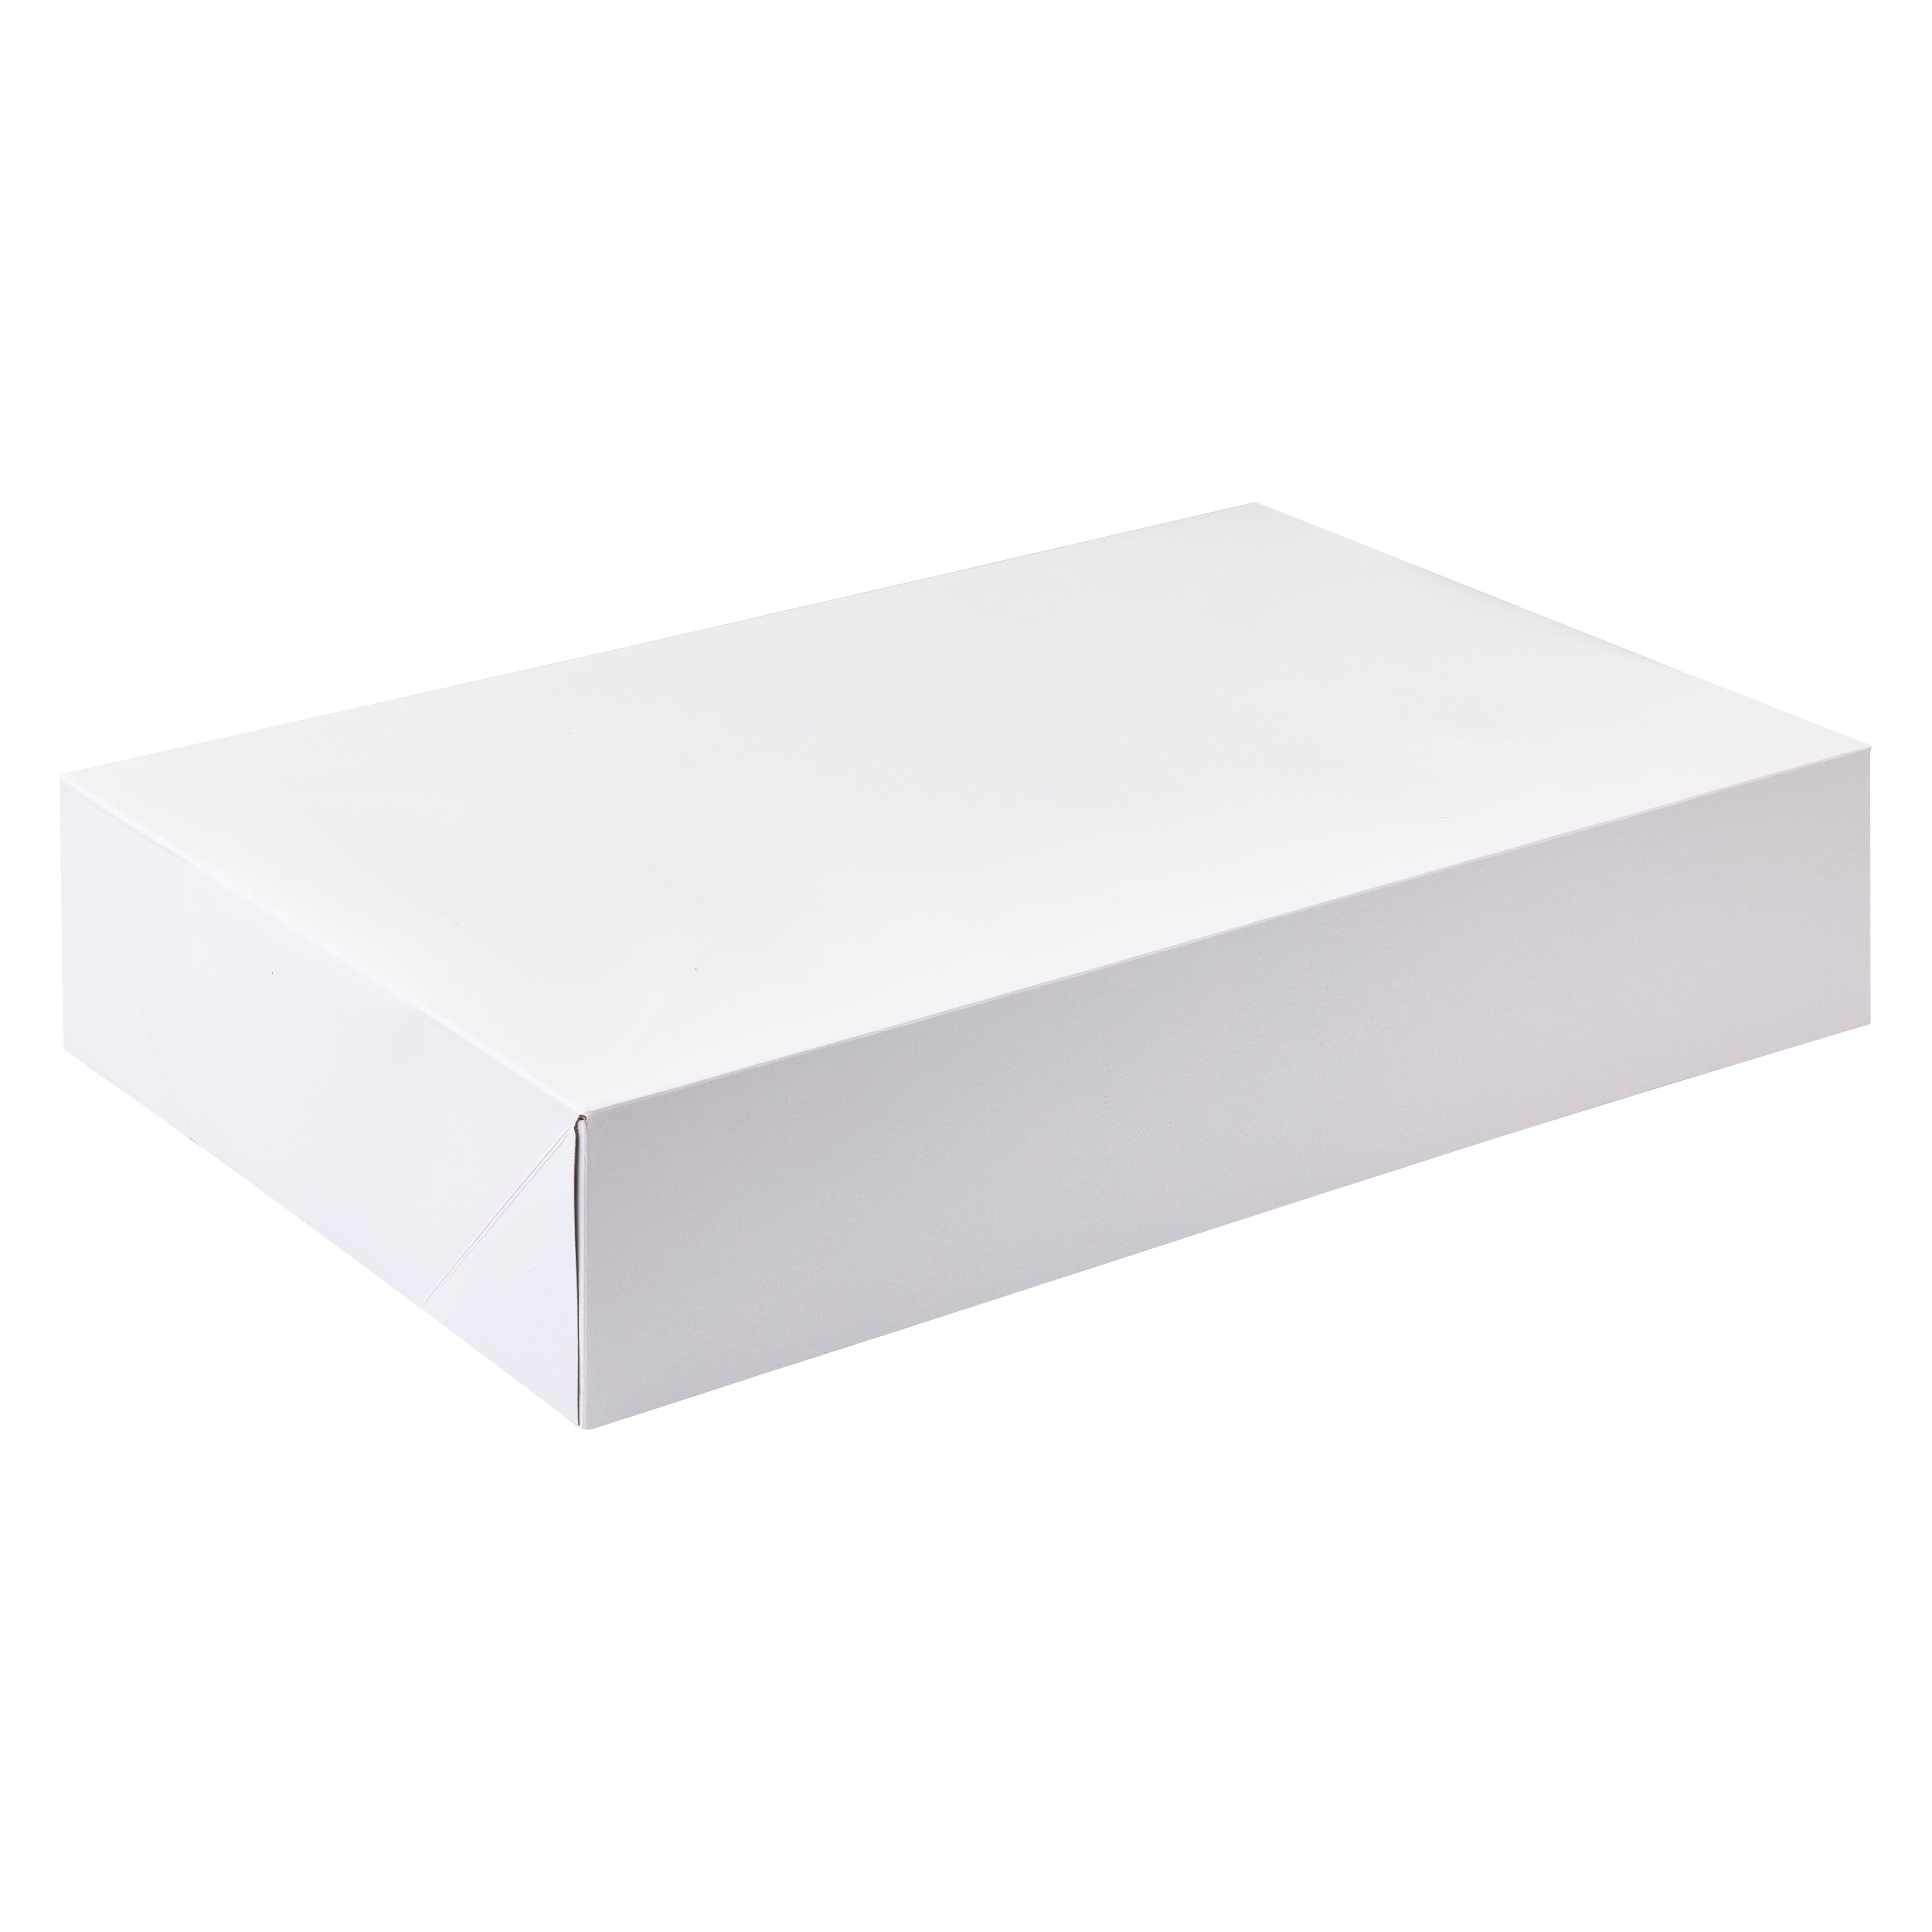 Wilton Corrugated Cake Boxes, 19 inch x 14 inch x 4 inch, 2 Ct, White